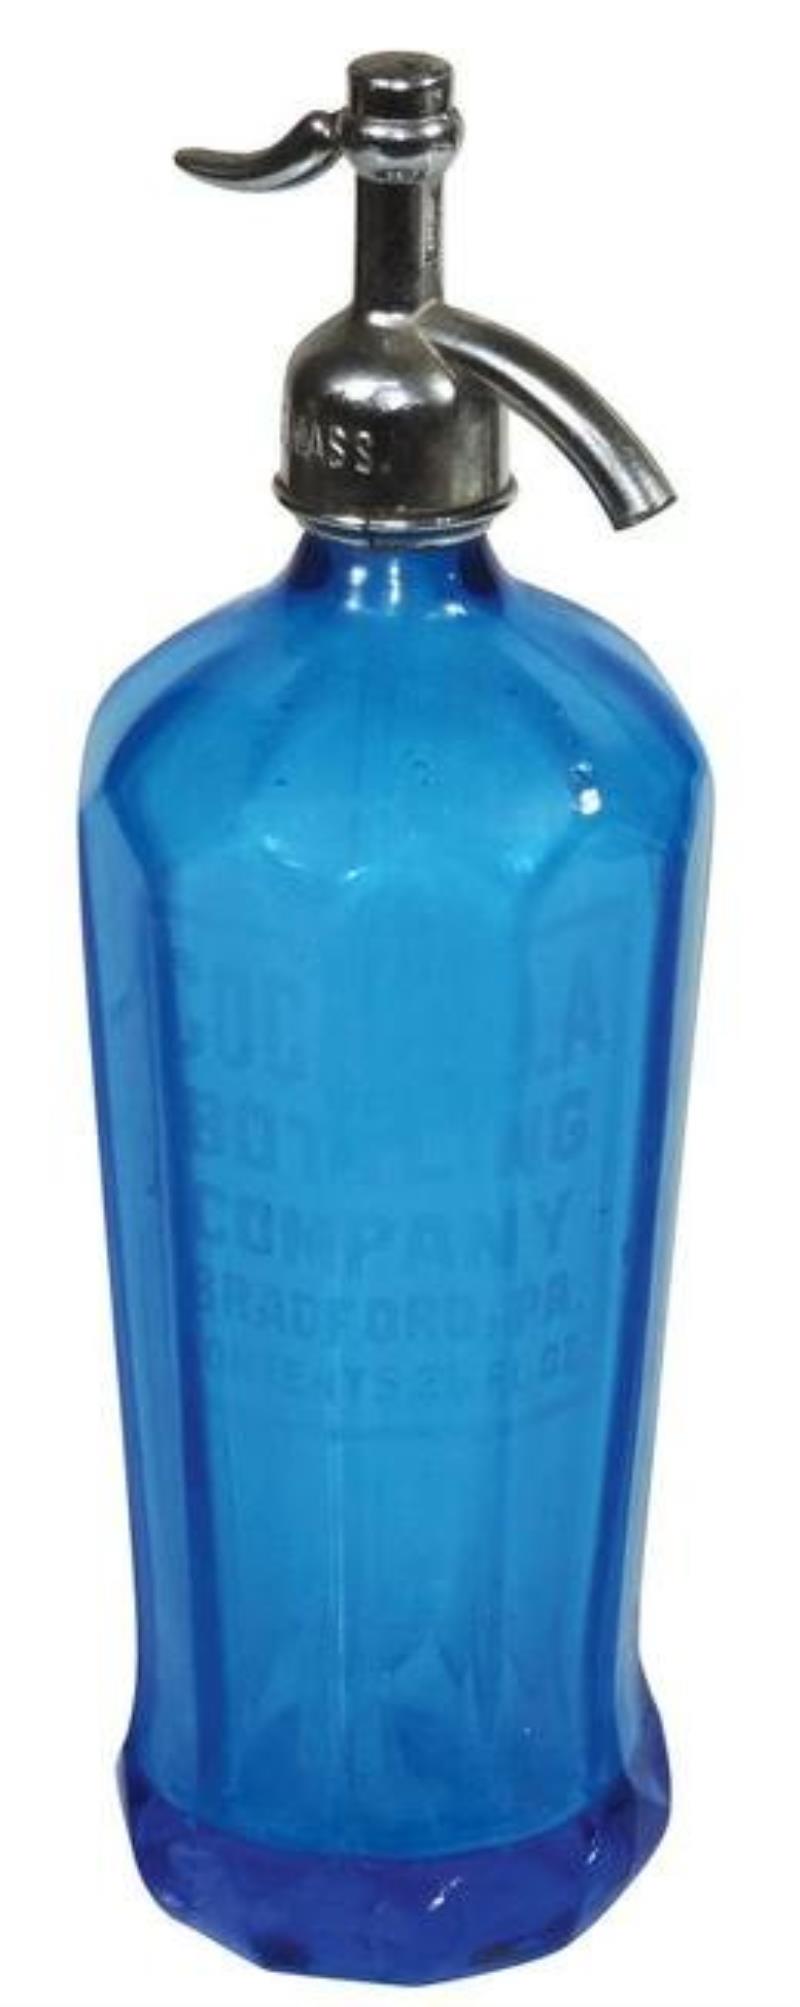 Coca-Cola Seltzer Bottle, sapphire blue paneled glass